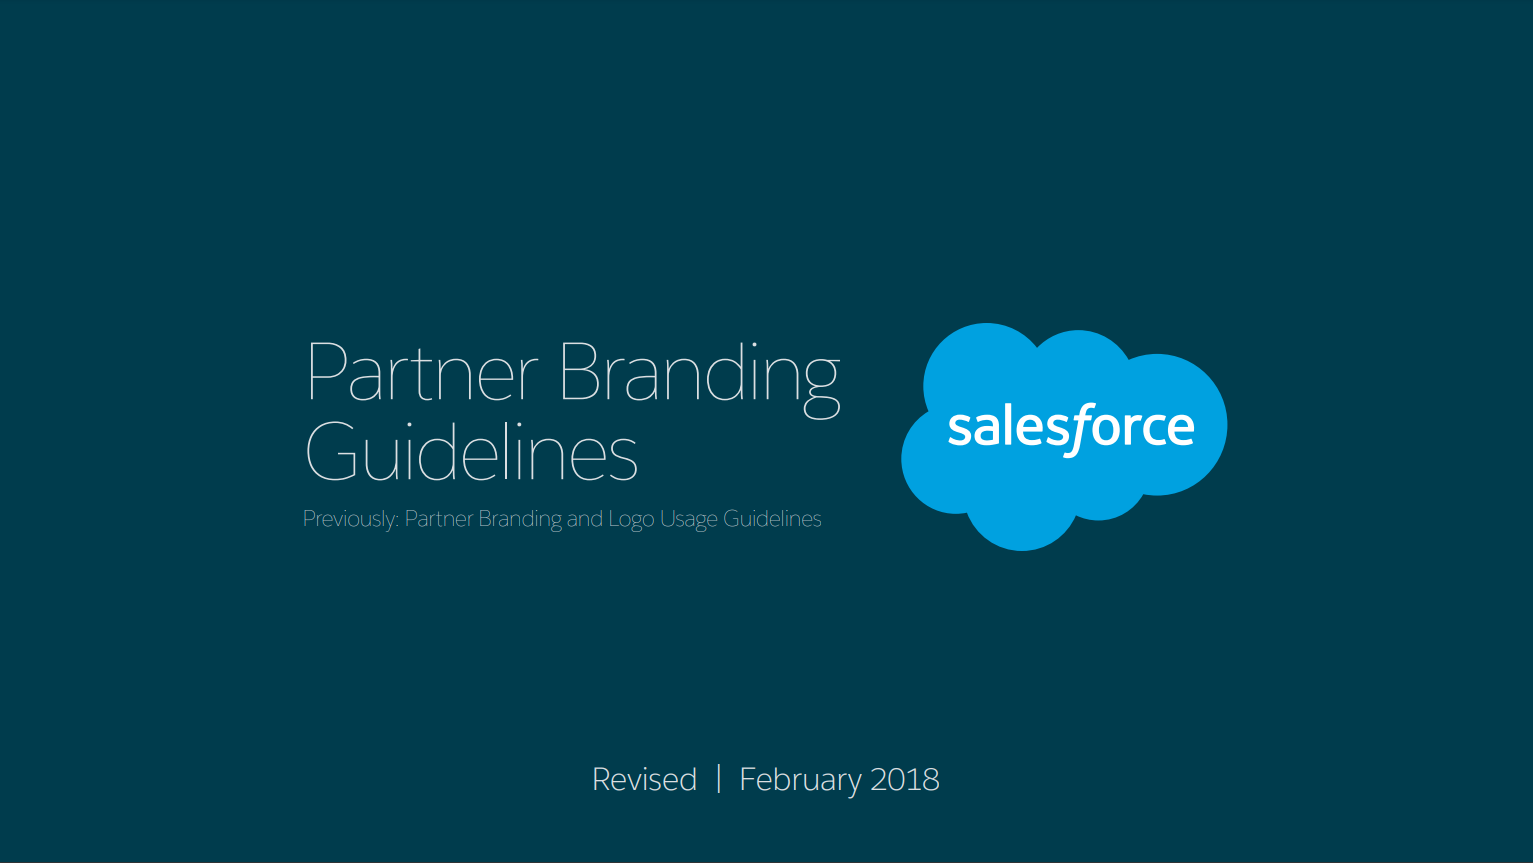 Salesforce's Brand Guide